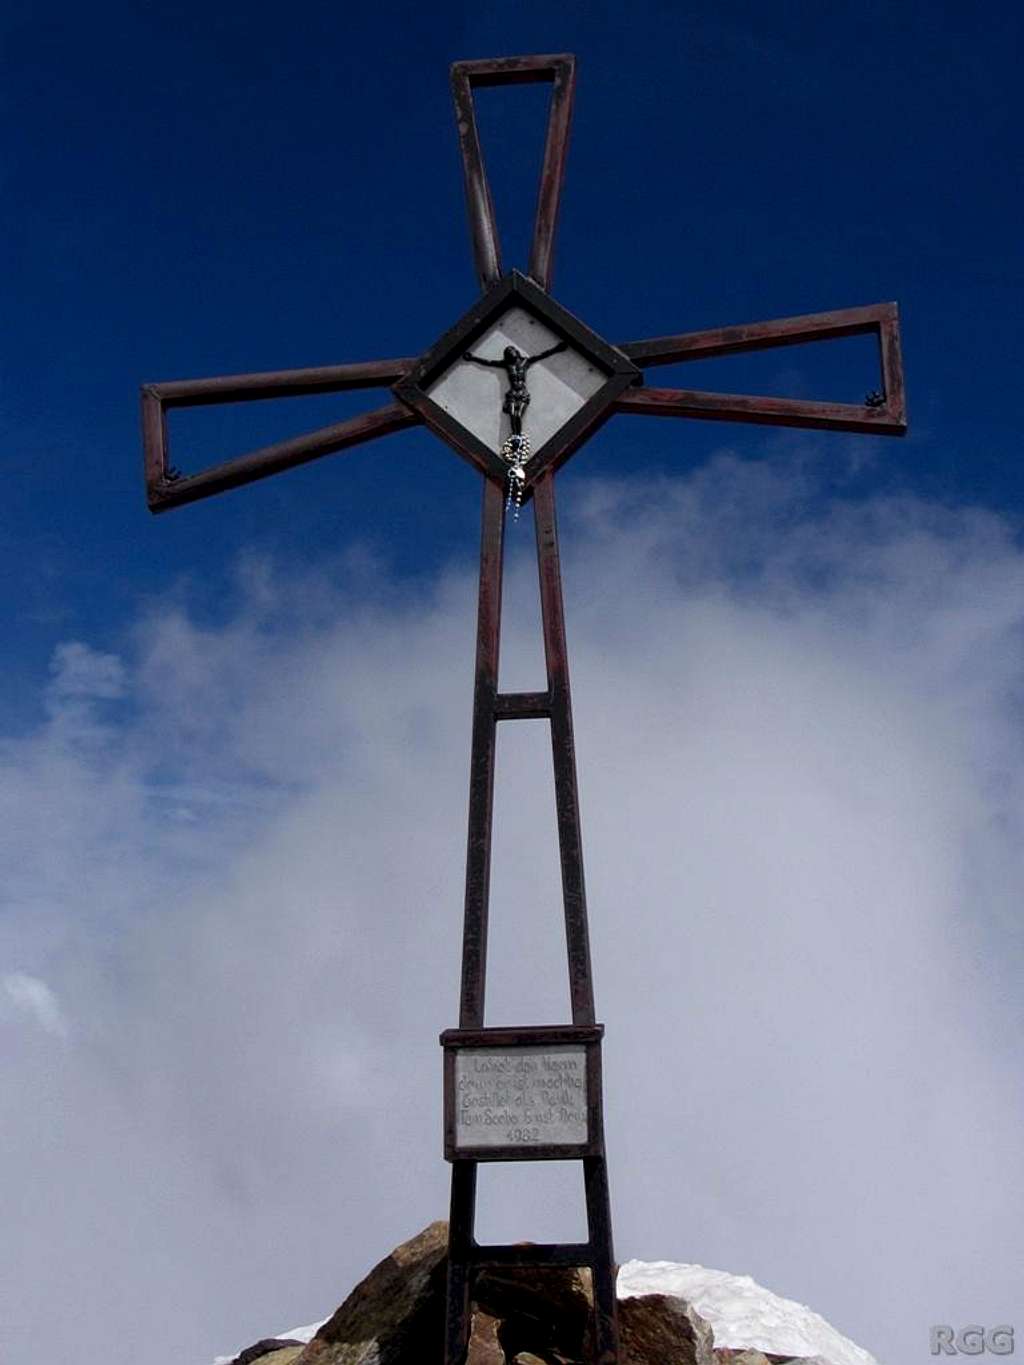 Schneebiger Nock summit cross